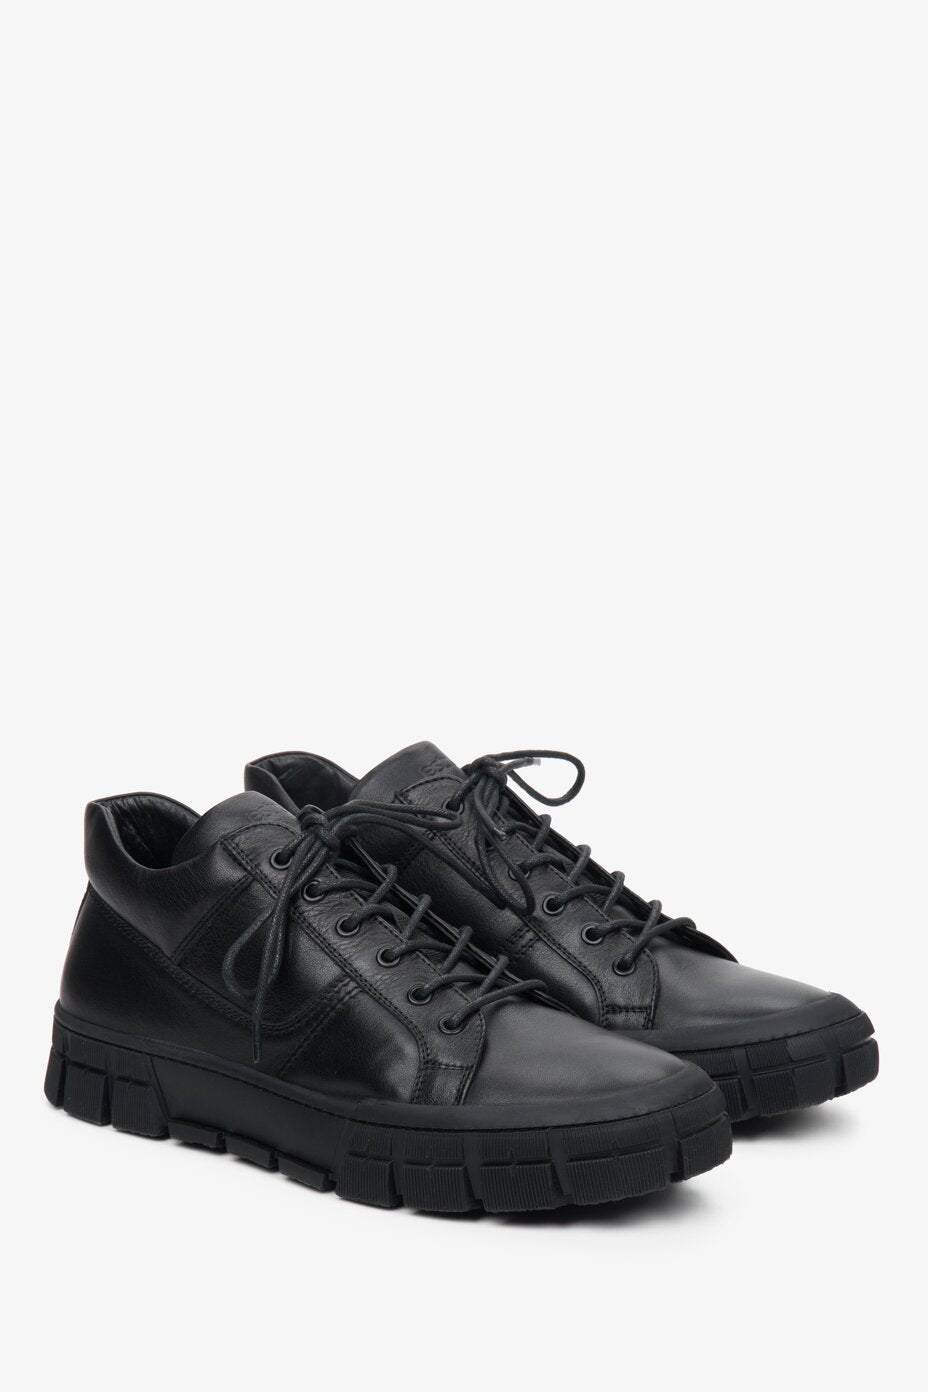 Lace-up men's winter shoes in black by Estro.